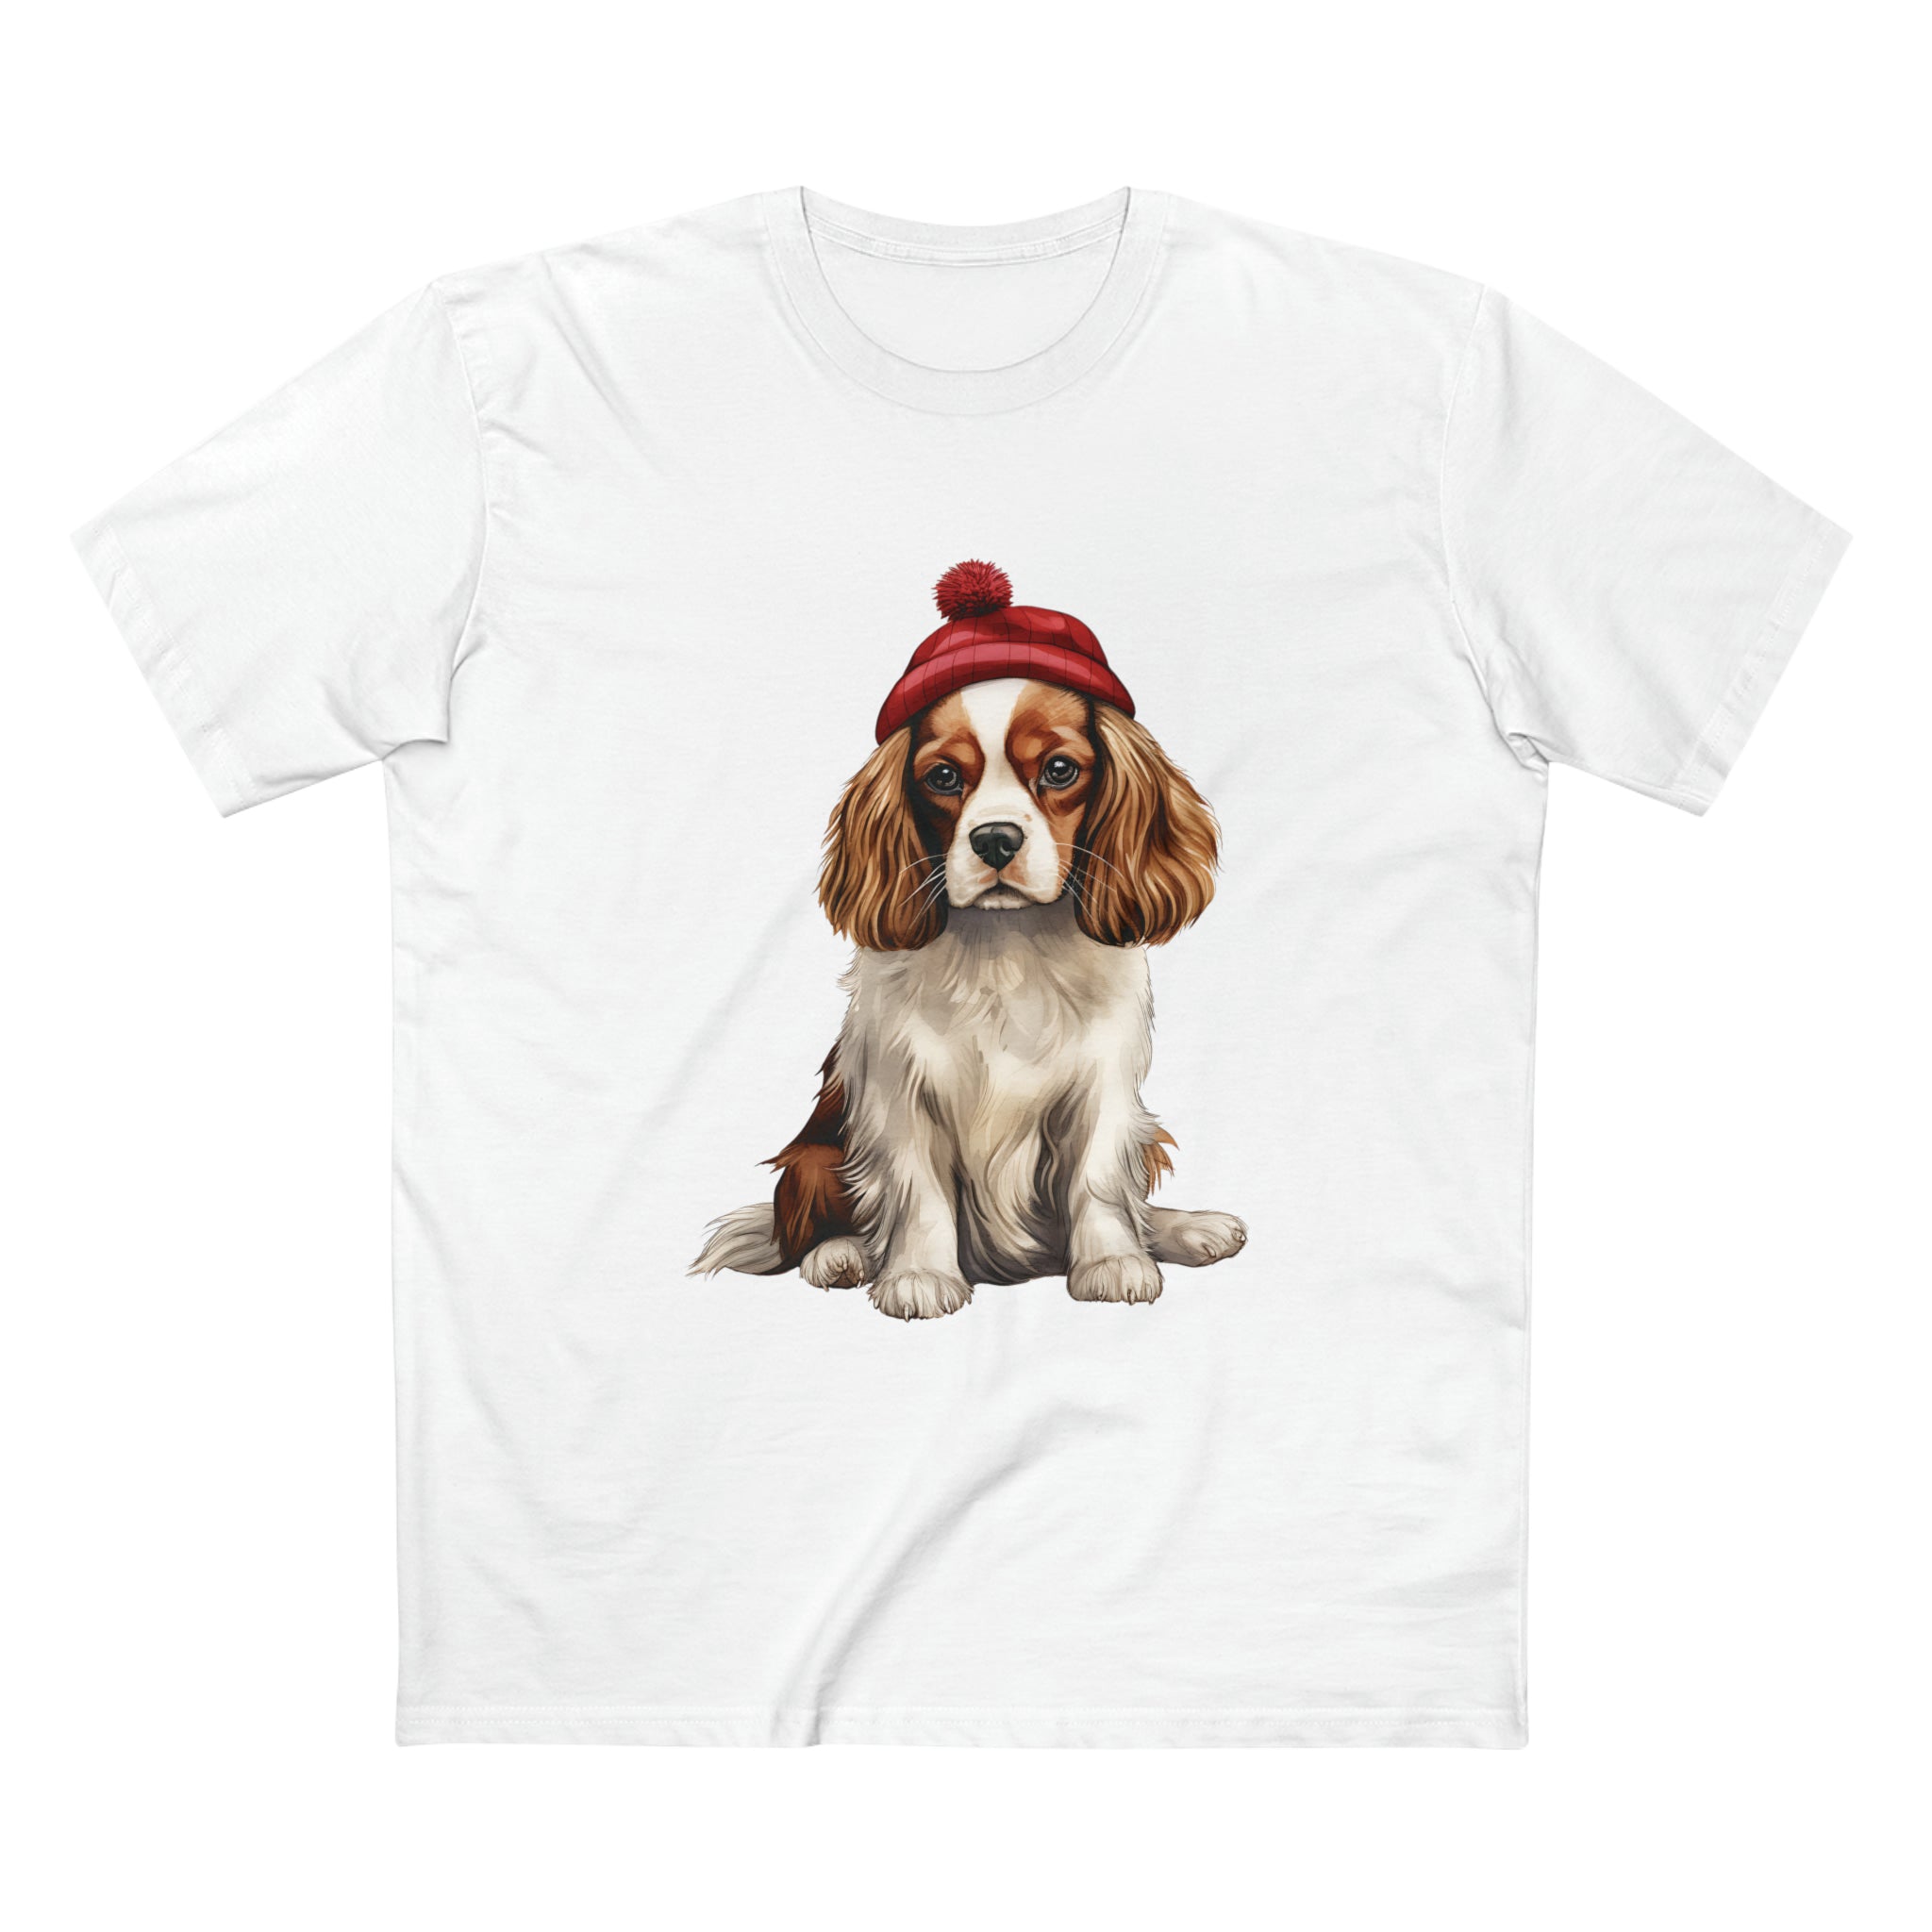 Christmas Dogs, Cavalier Spaniel Dog | Unisex Premium Cotton Crewneck T-Shirt in White, Size AU S-5XL | Regular Fit, Short Sleeves, Preshrunk Material